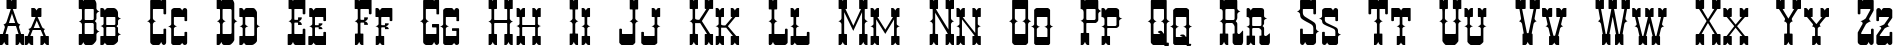 Пример написания английского алфавита шрифтом Decree Art Two